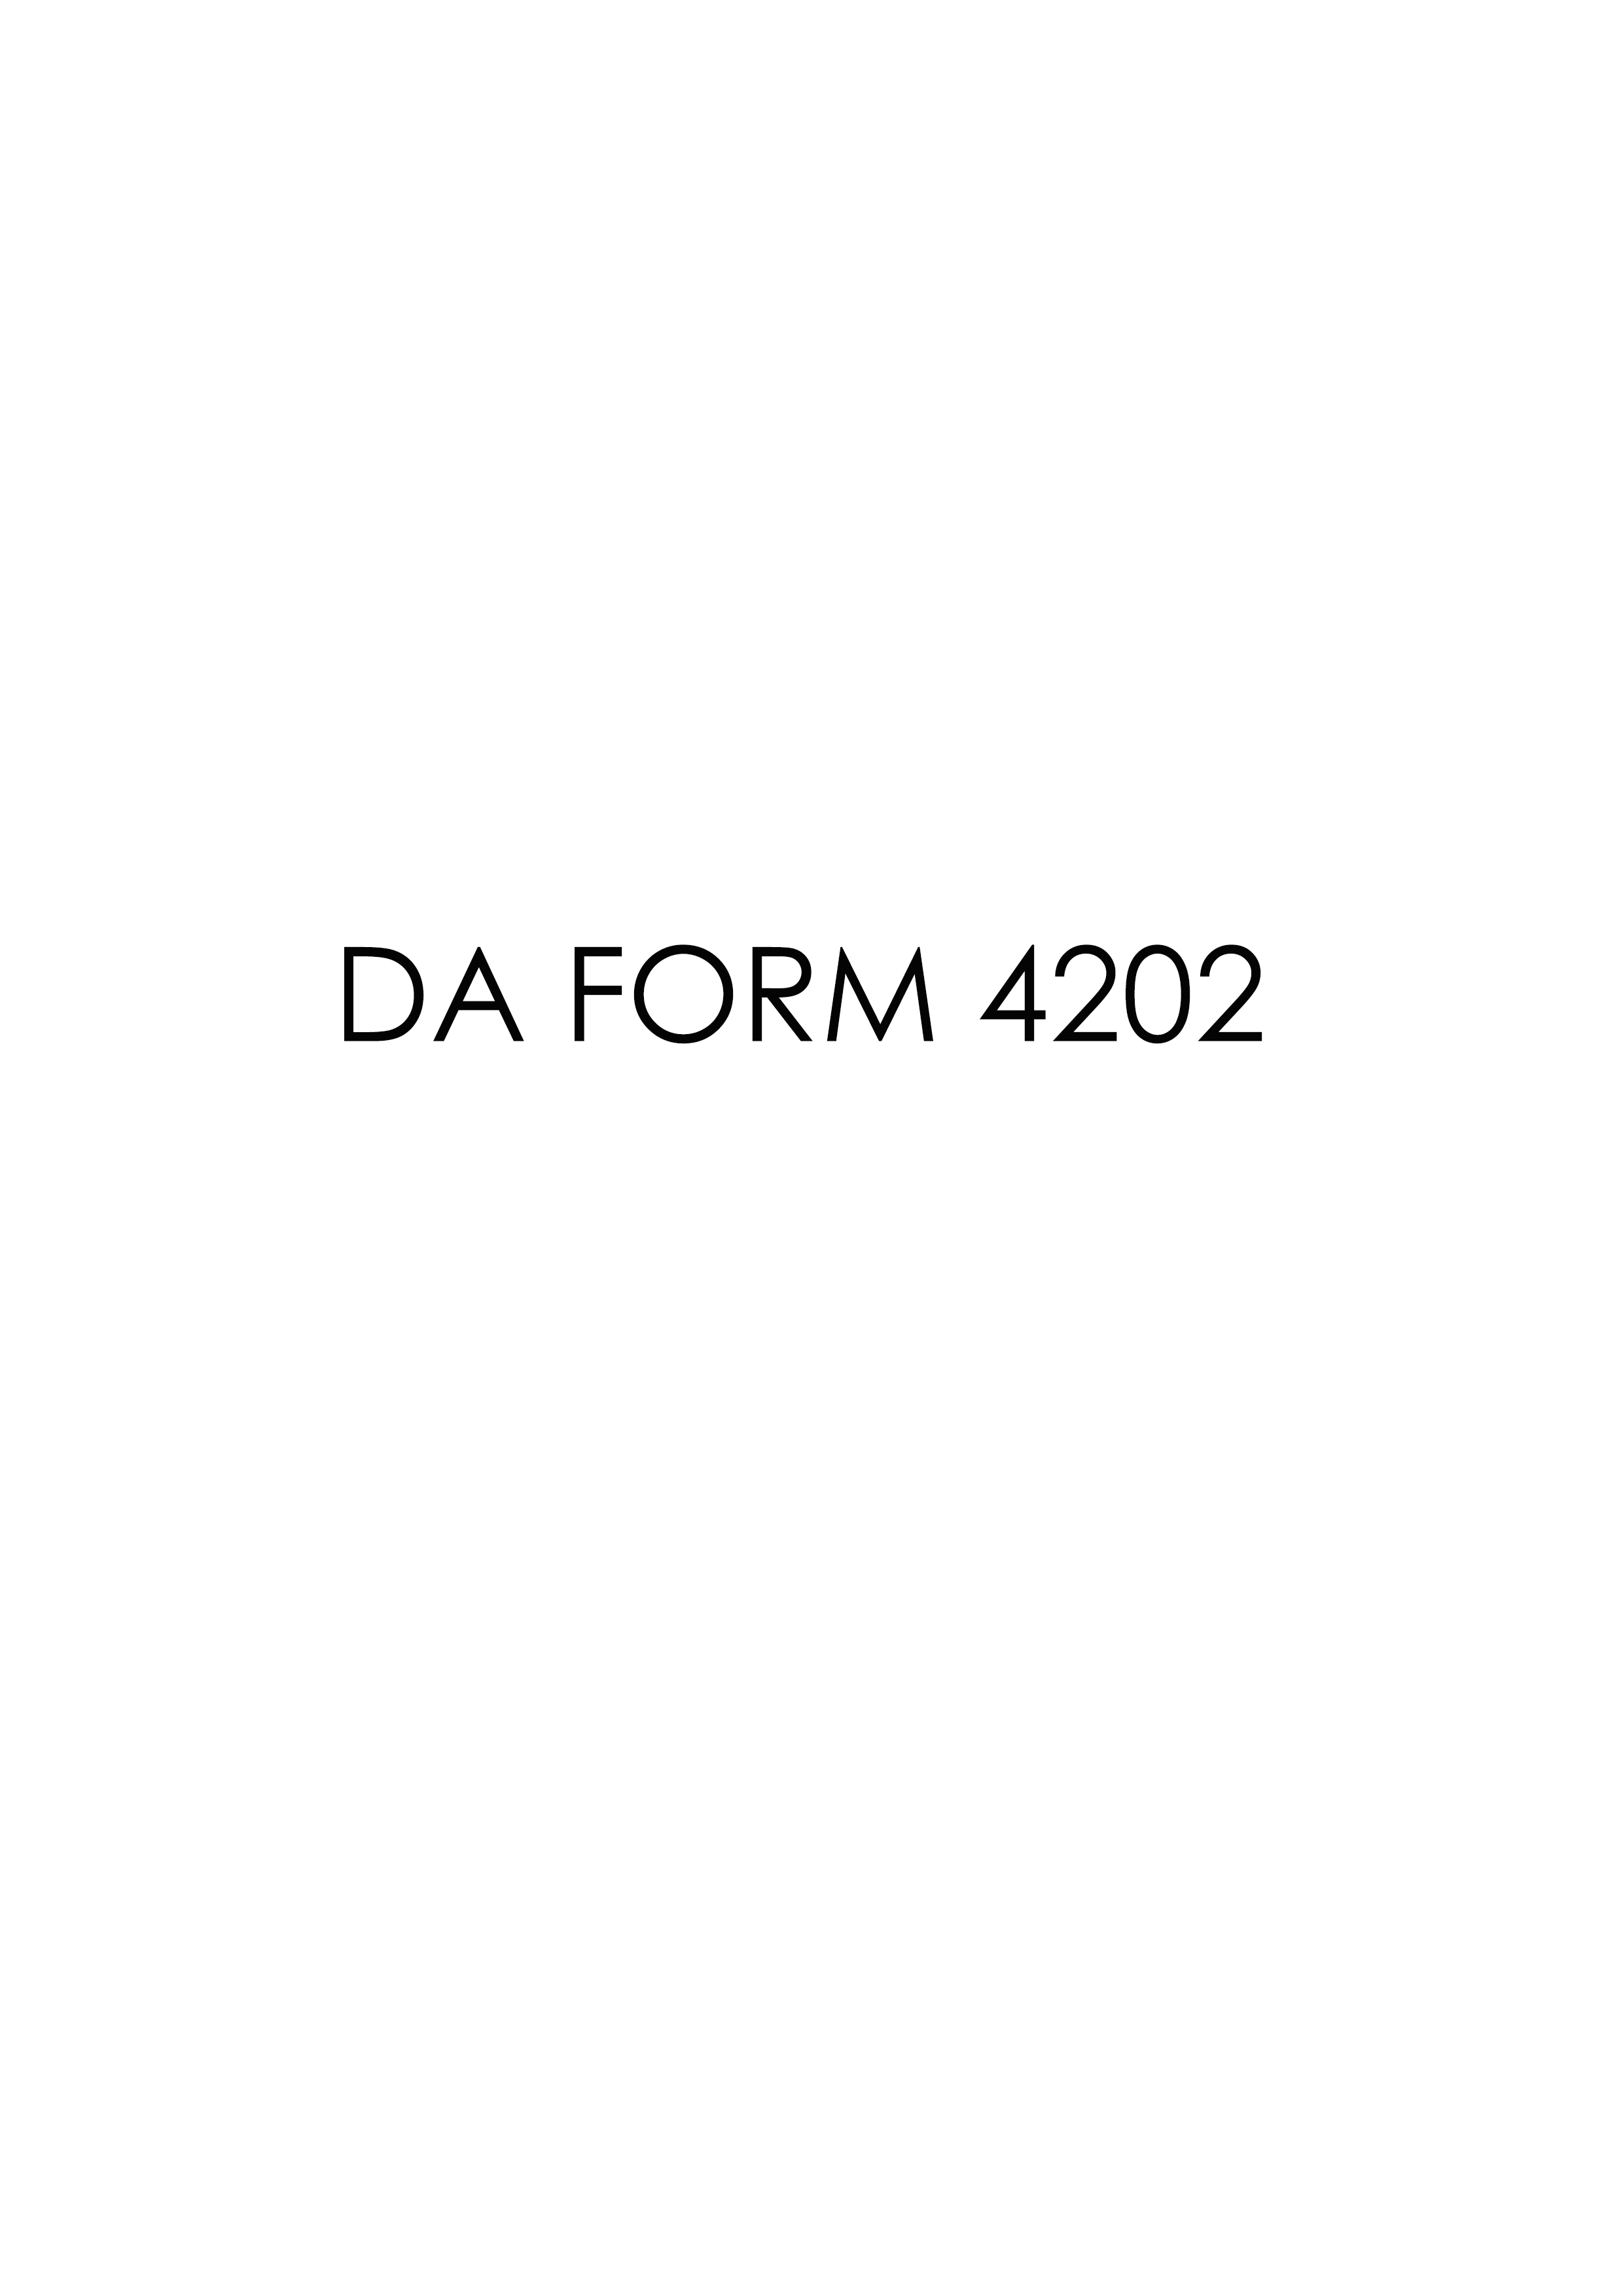 da Form 4202 fillable